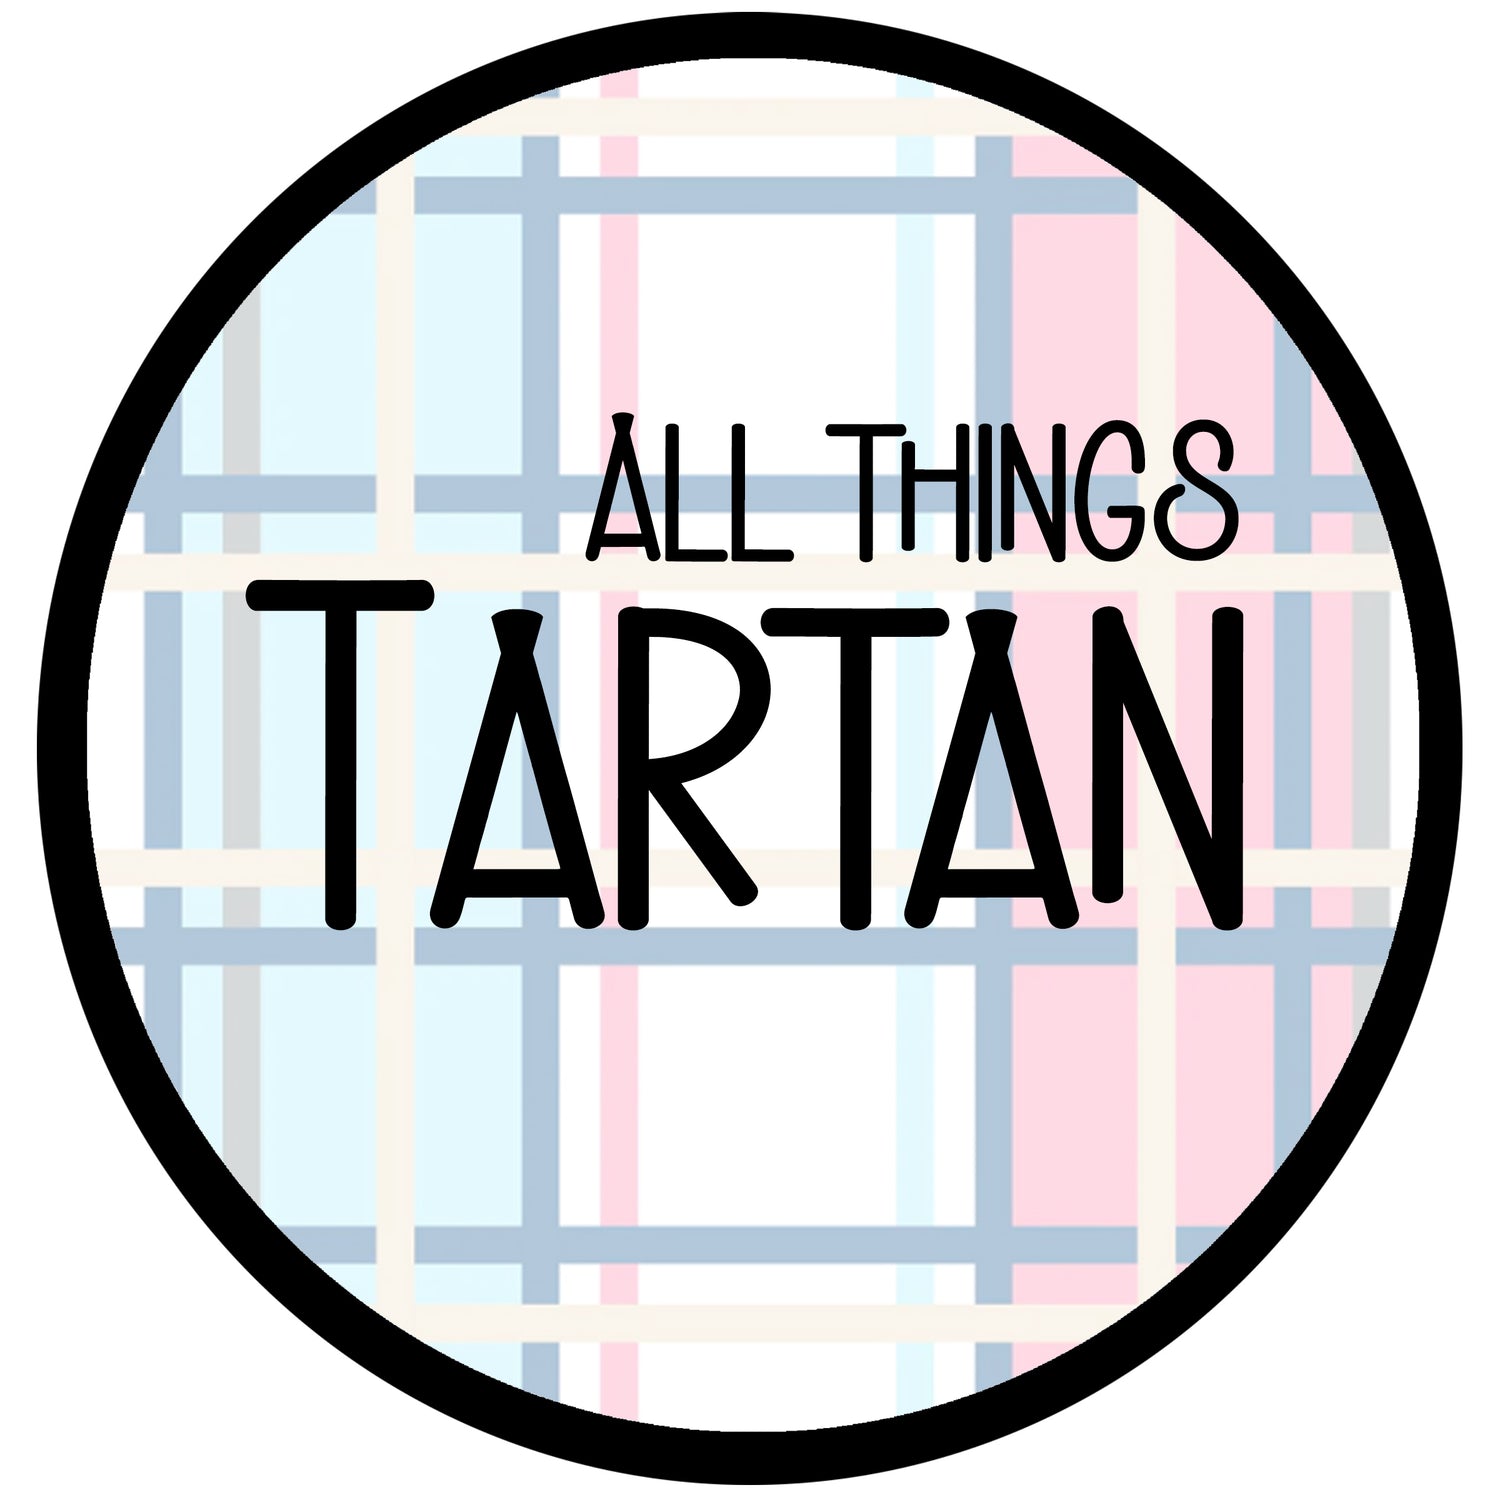 All things Tartan